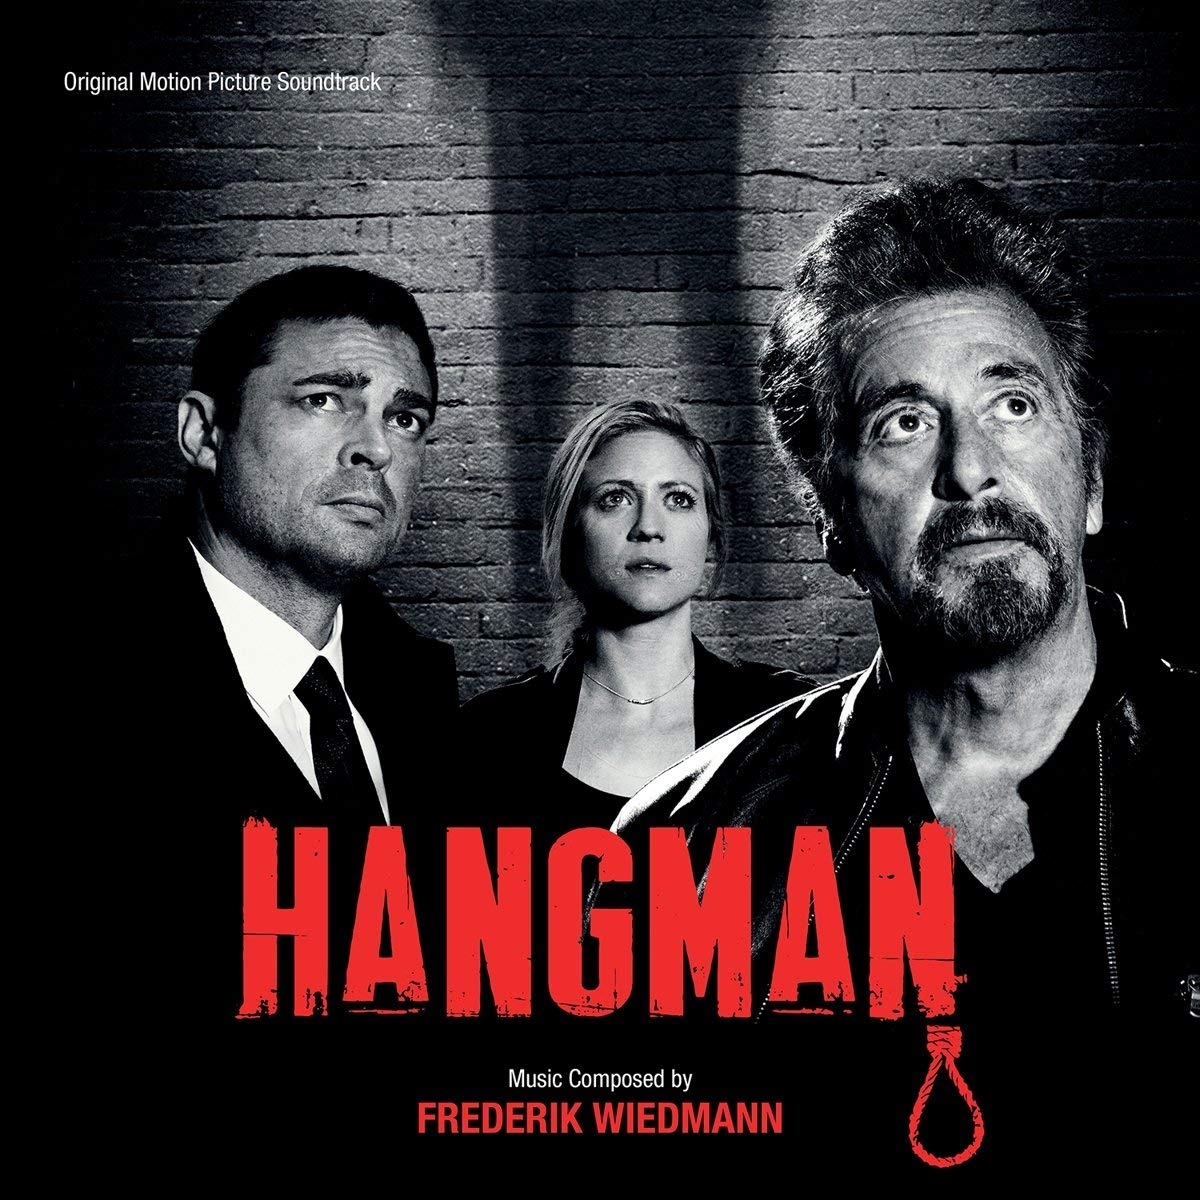 ost 06 18 VS Hangman